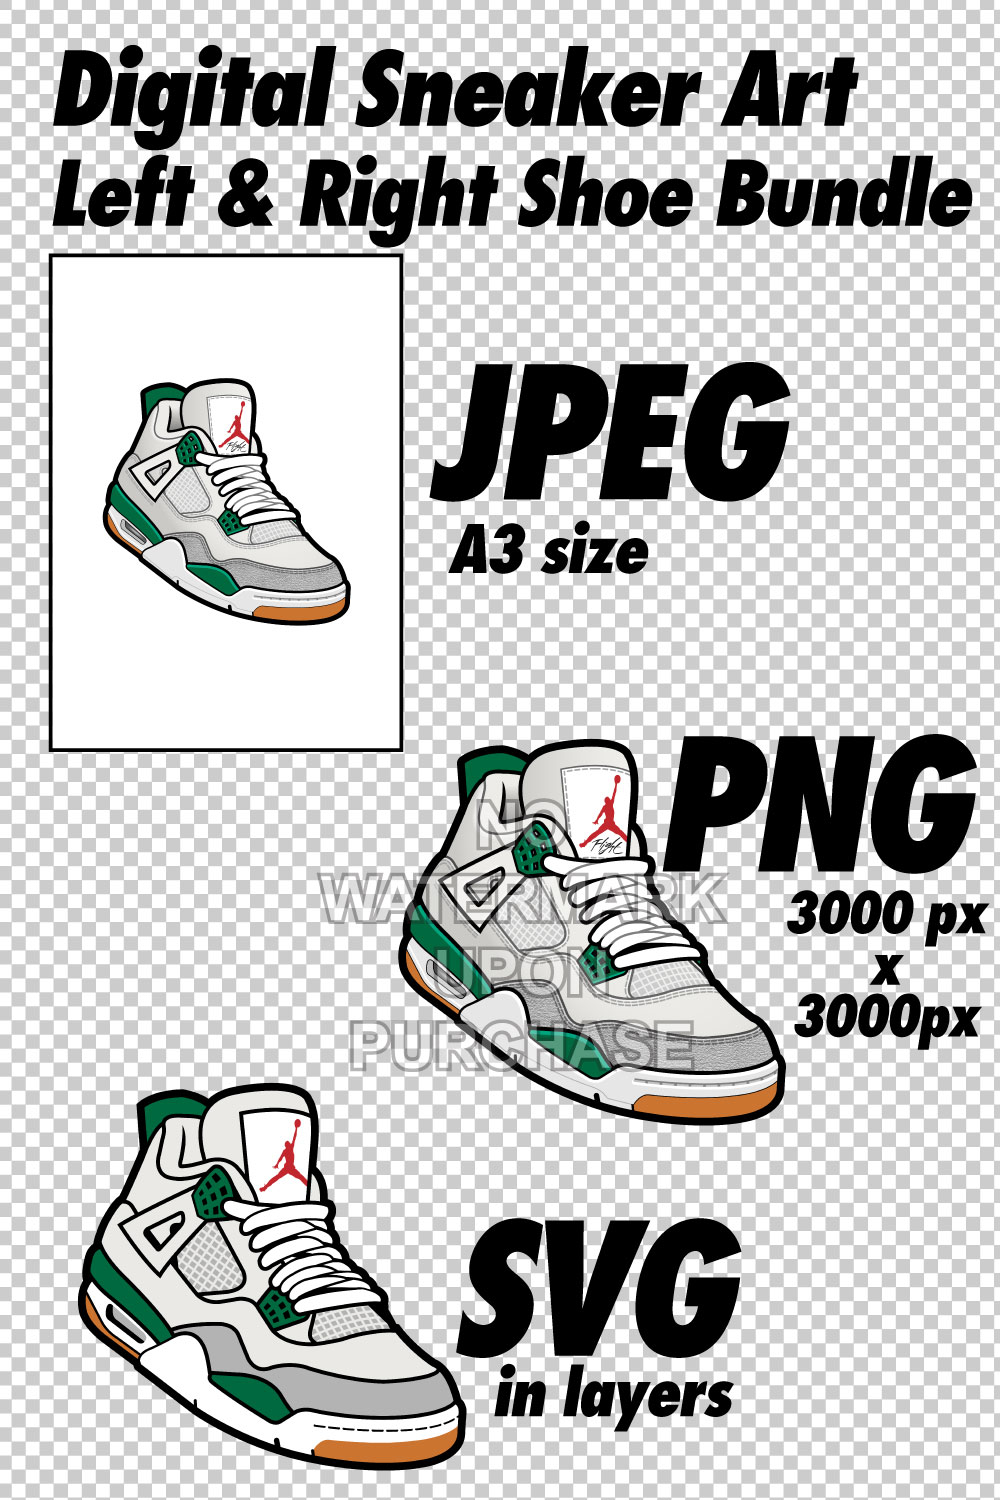 Air Jordan 4 SB Pine Green JPEG PNG SVG Sneaker Art Right & Left Shoe Bundle pinterest preview image.